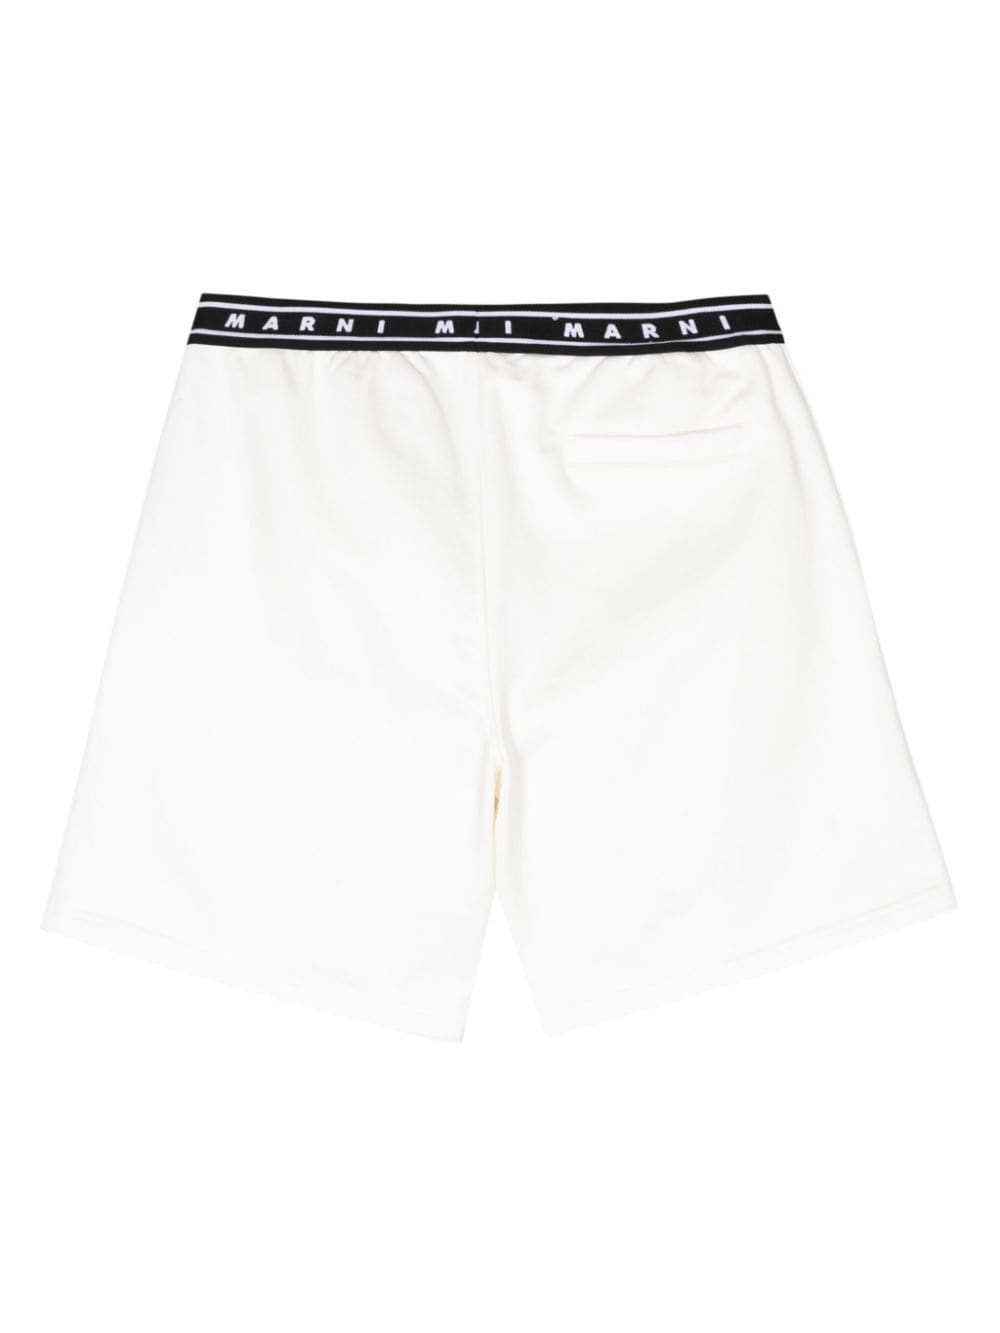 Shorts in cotone con cinturino con stampa logo<br><br><br>